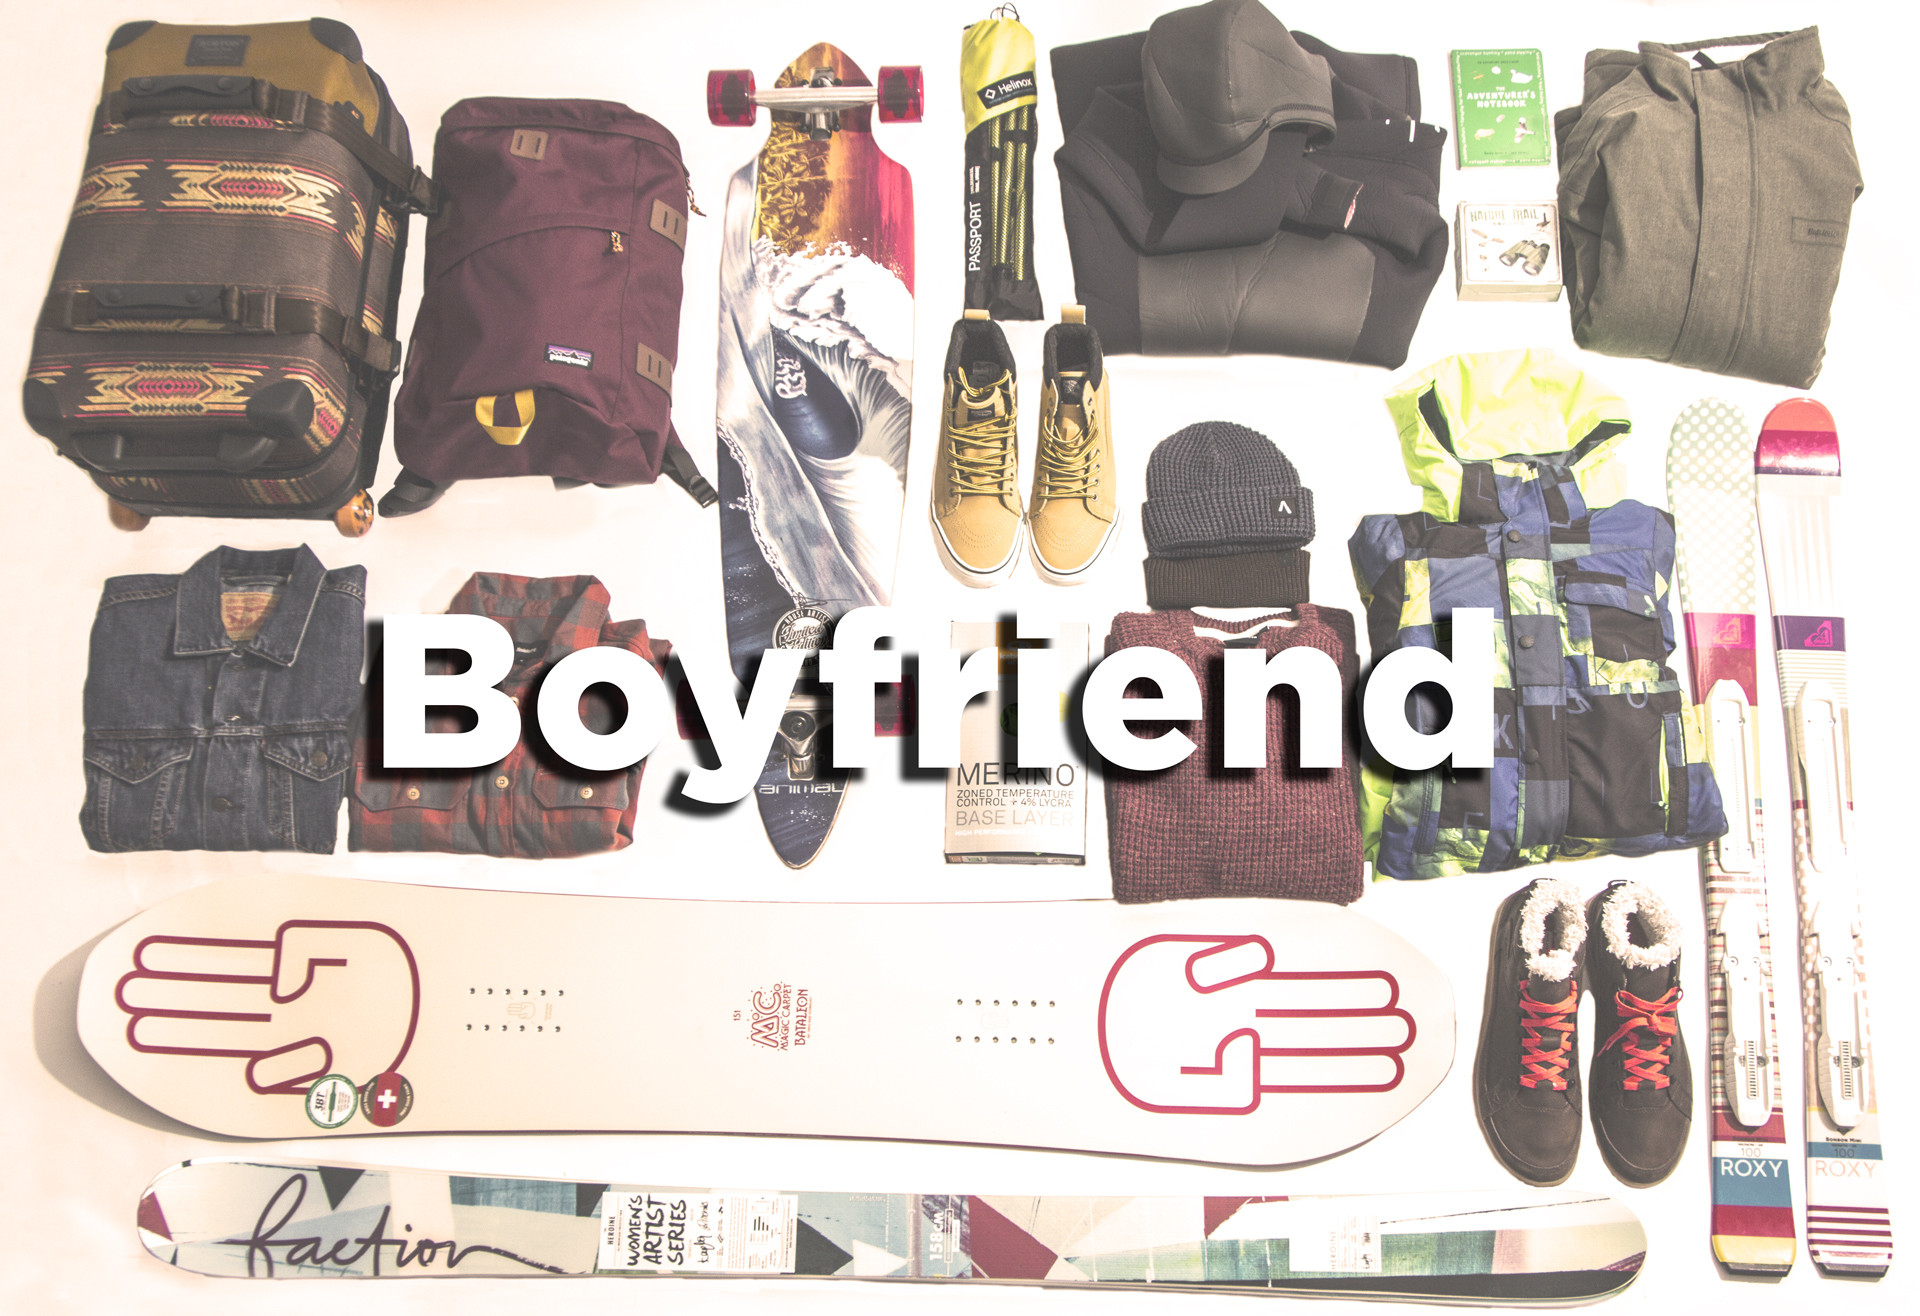 Christmas Gift Ideas For Boyfriend
 Christmas Gift Ideas For A Boyfriend 15 Great Gifts